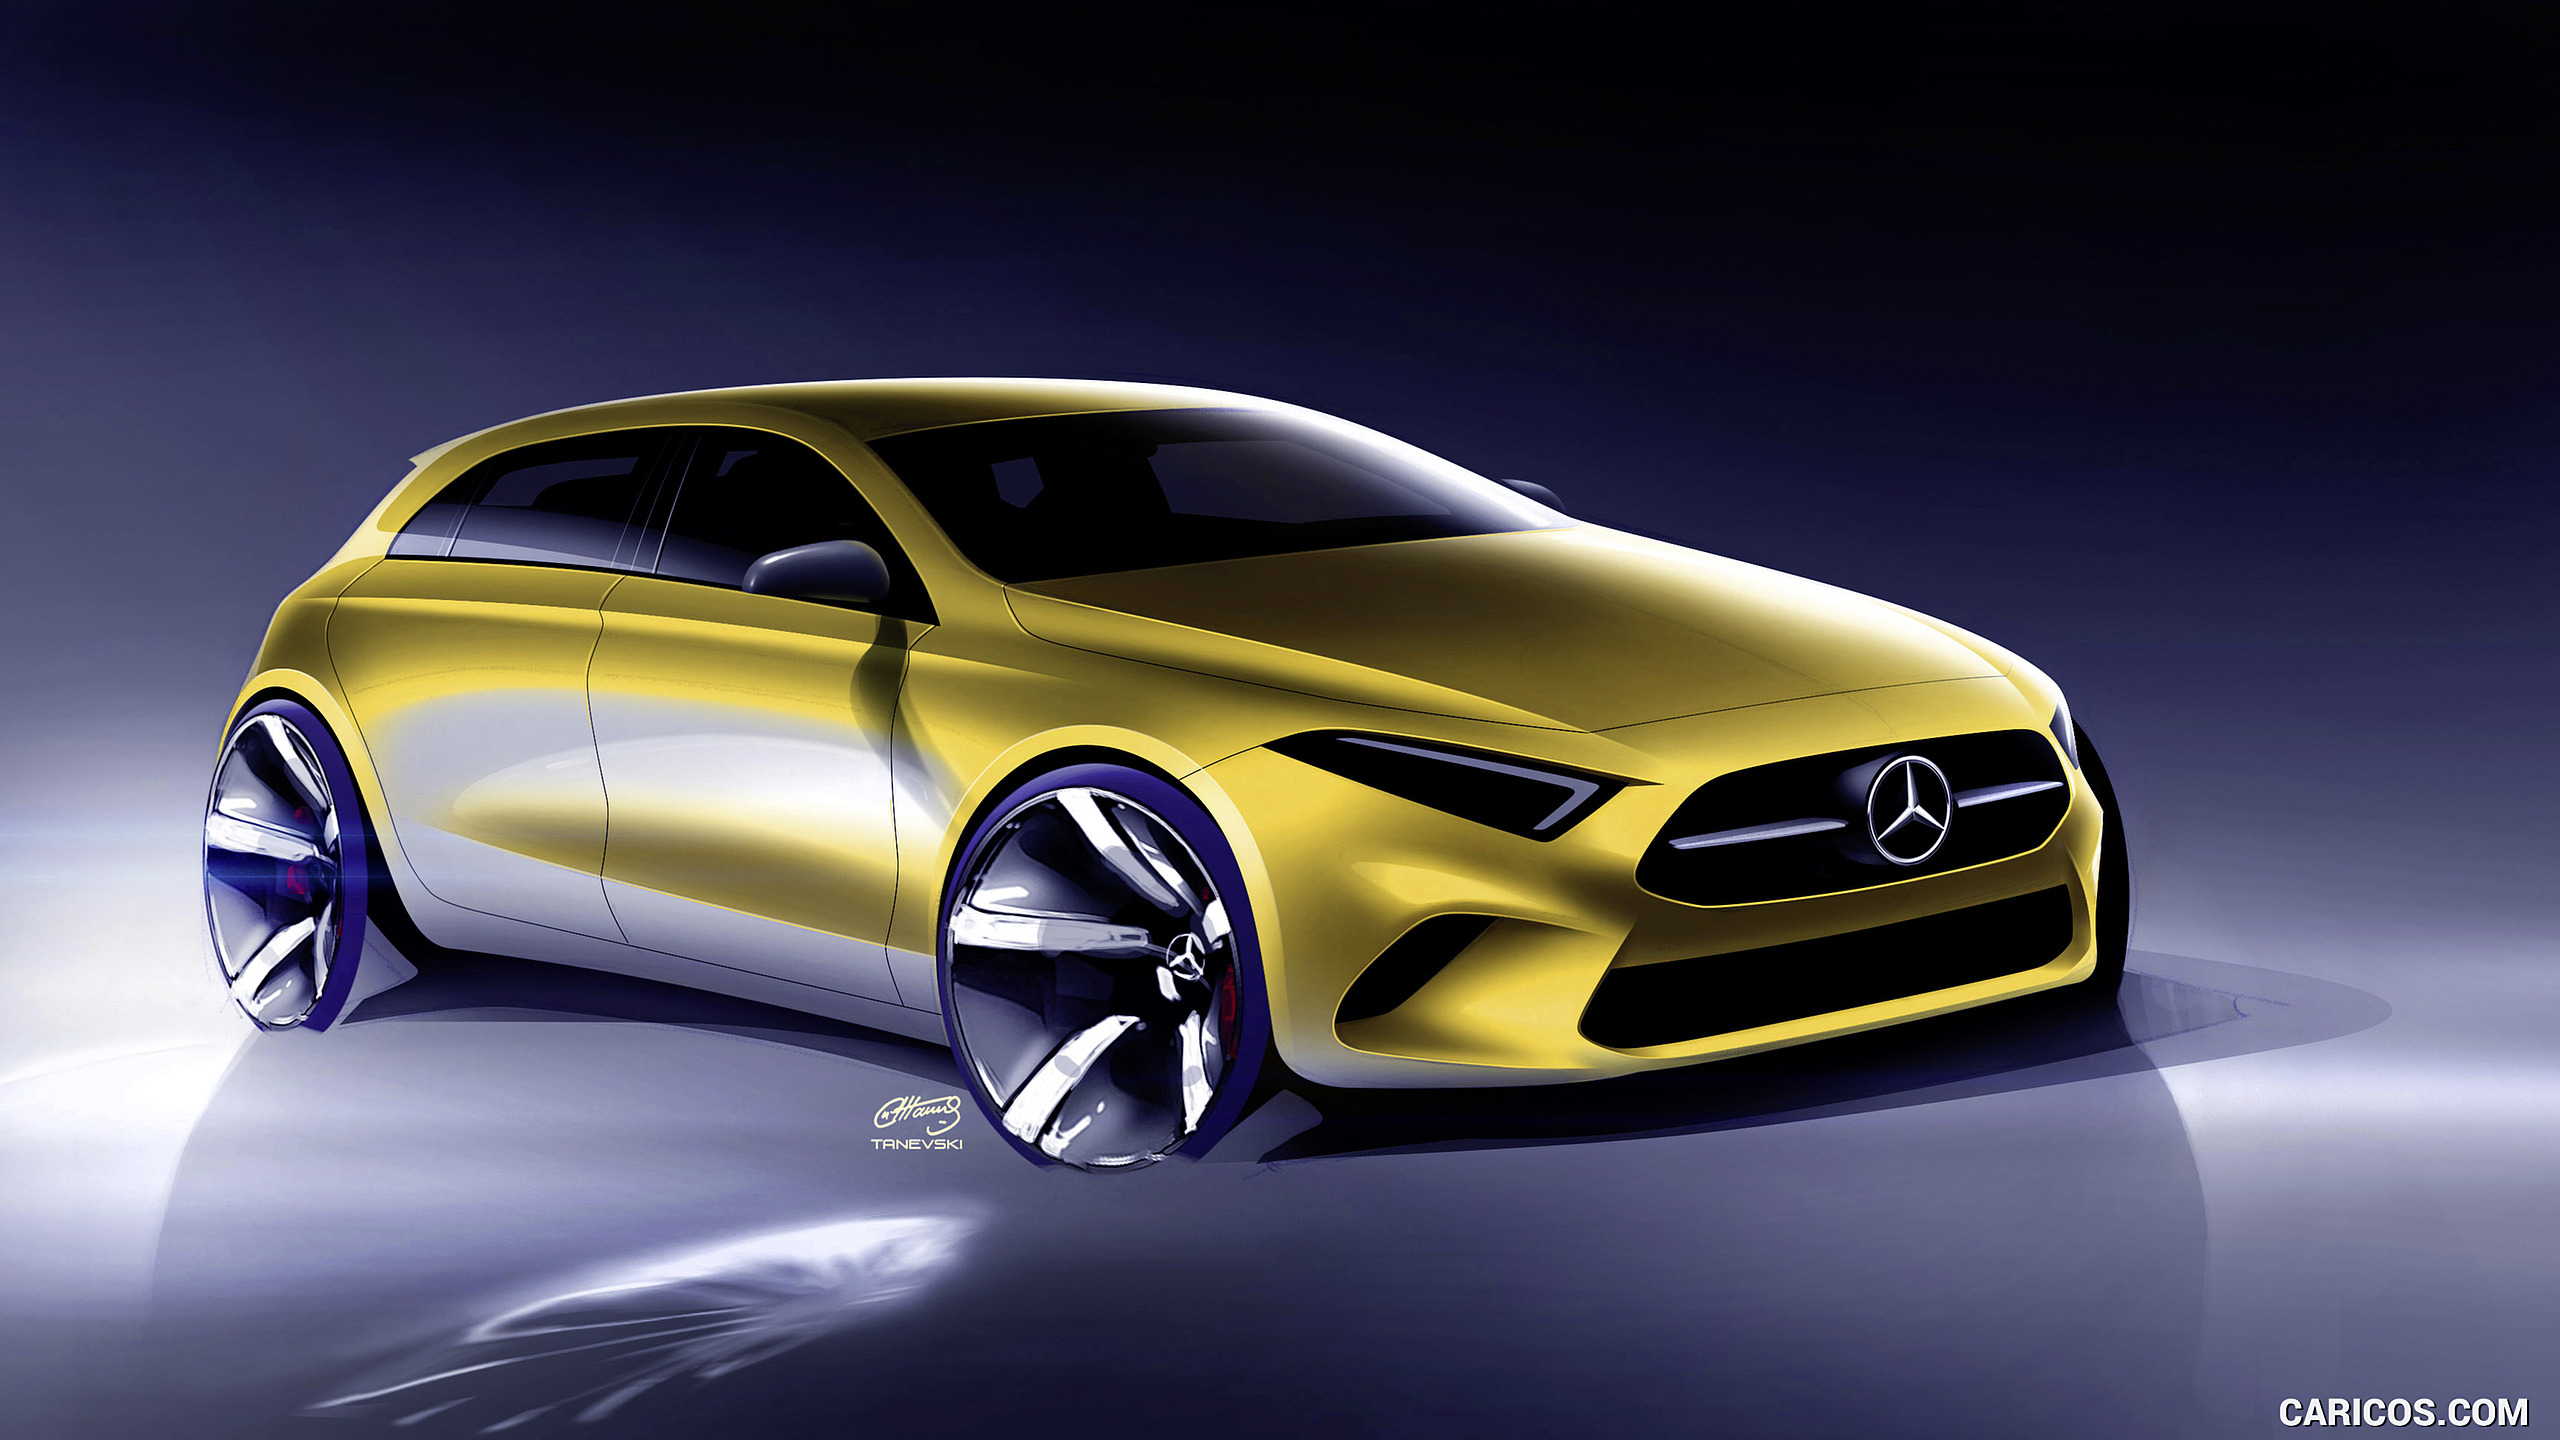 2019 Mercedes-Benz A-Class - Design Sketch, #81 of 181